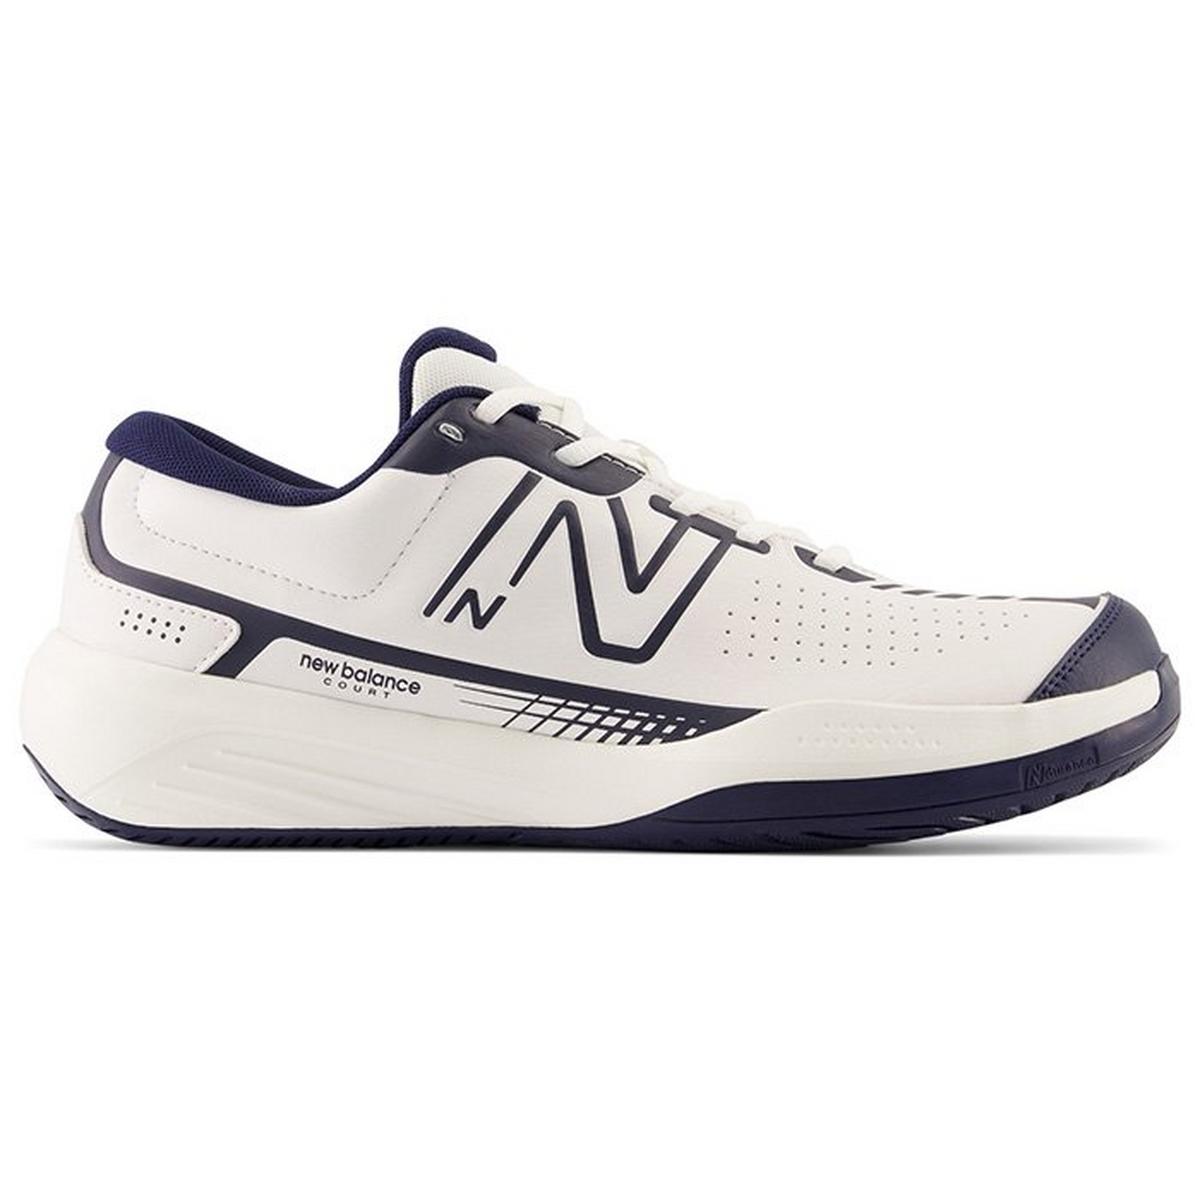 Men's 696v5 Tennis Shoe (Wide)